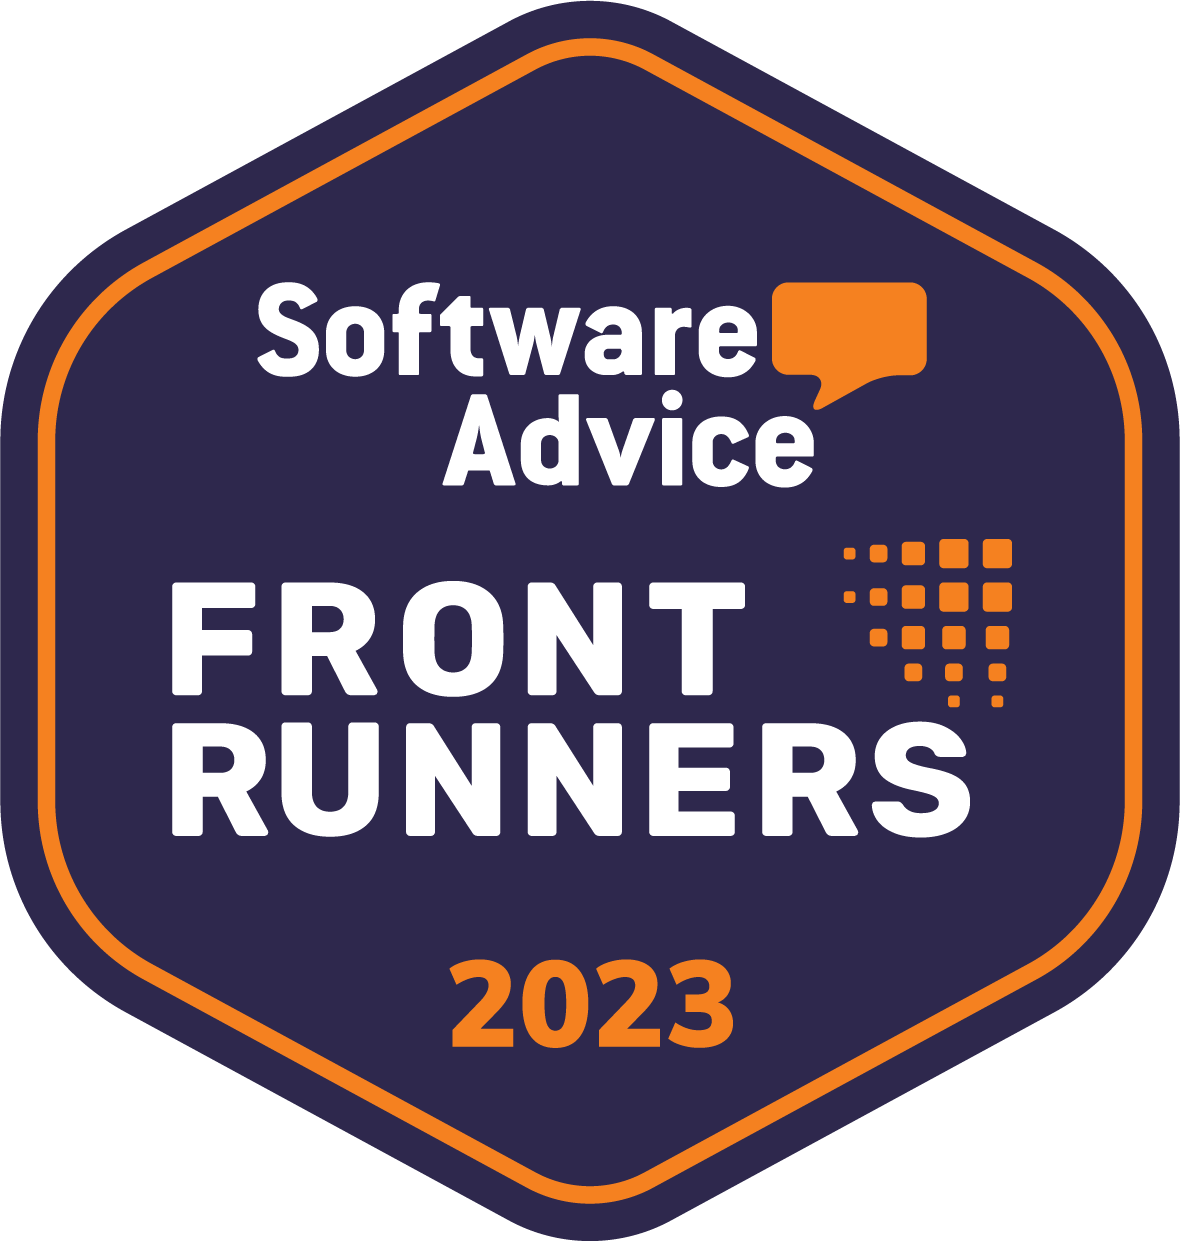 SoftwareAdvice Front Runner for 2023